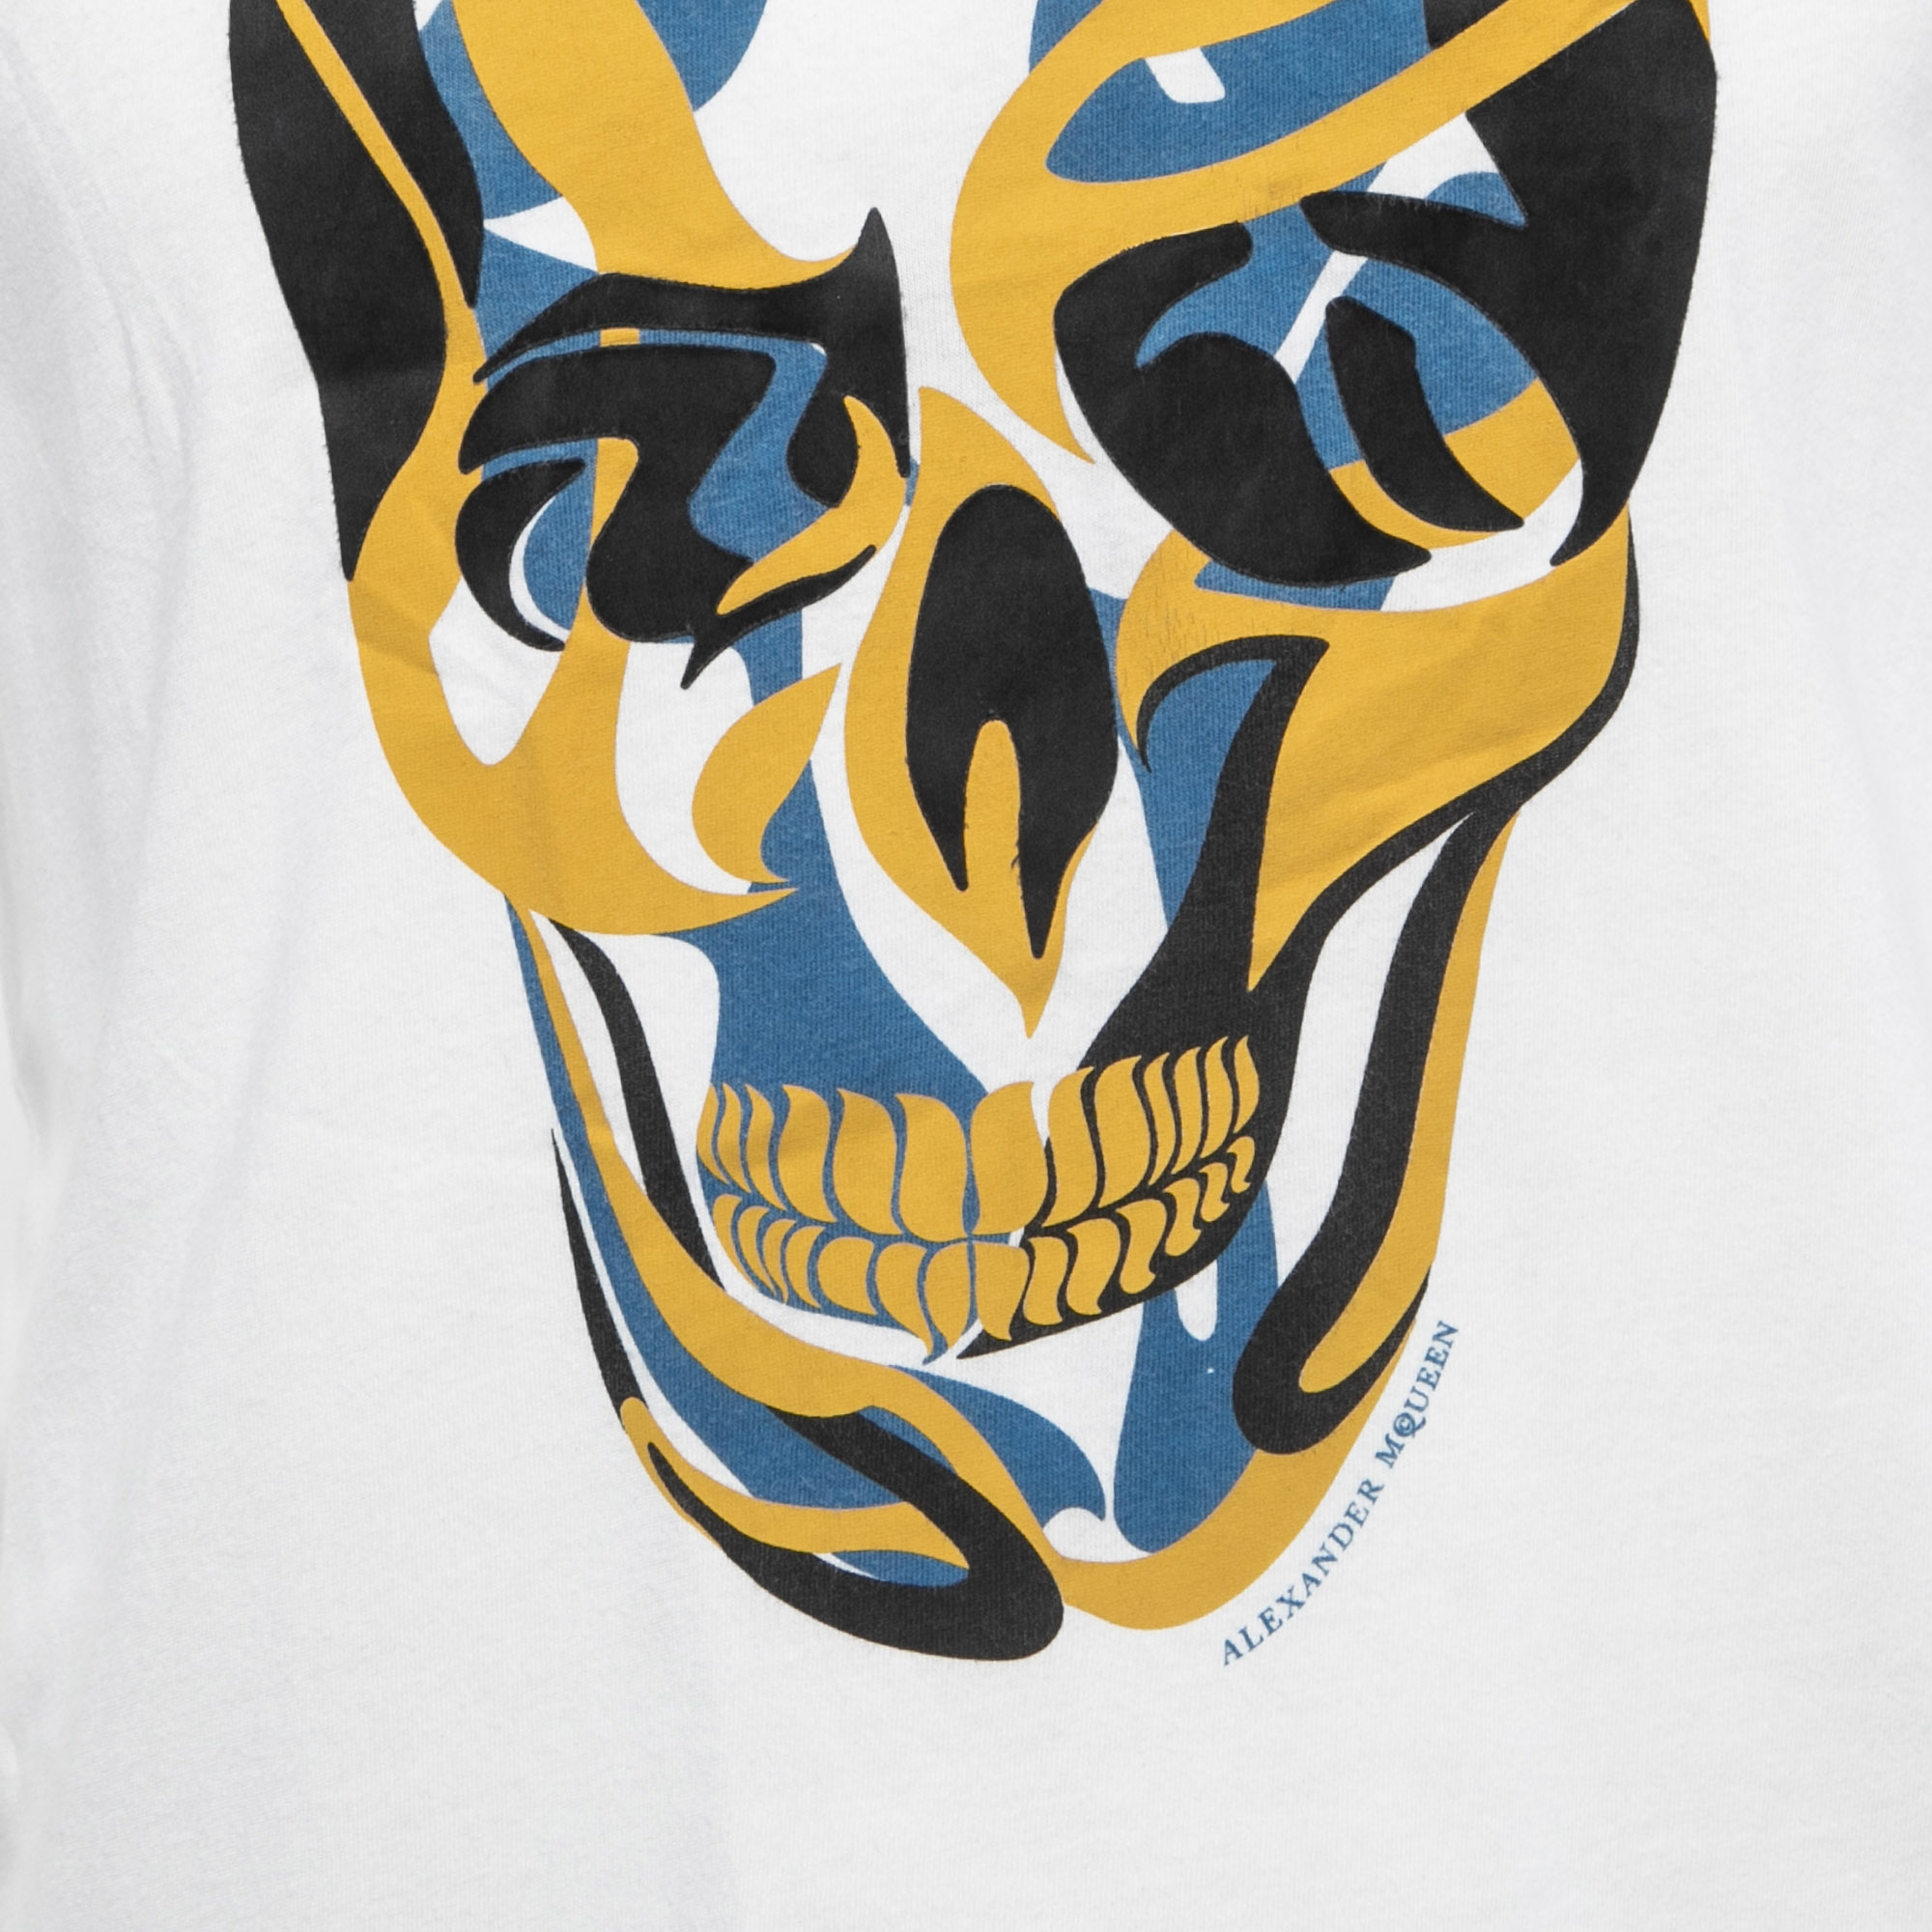 Alexander McQueen White Skull Print Cotton Crew Neck Half Sleeve T-Shirt S